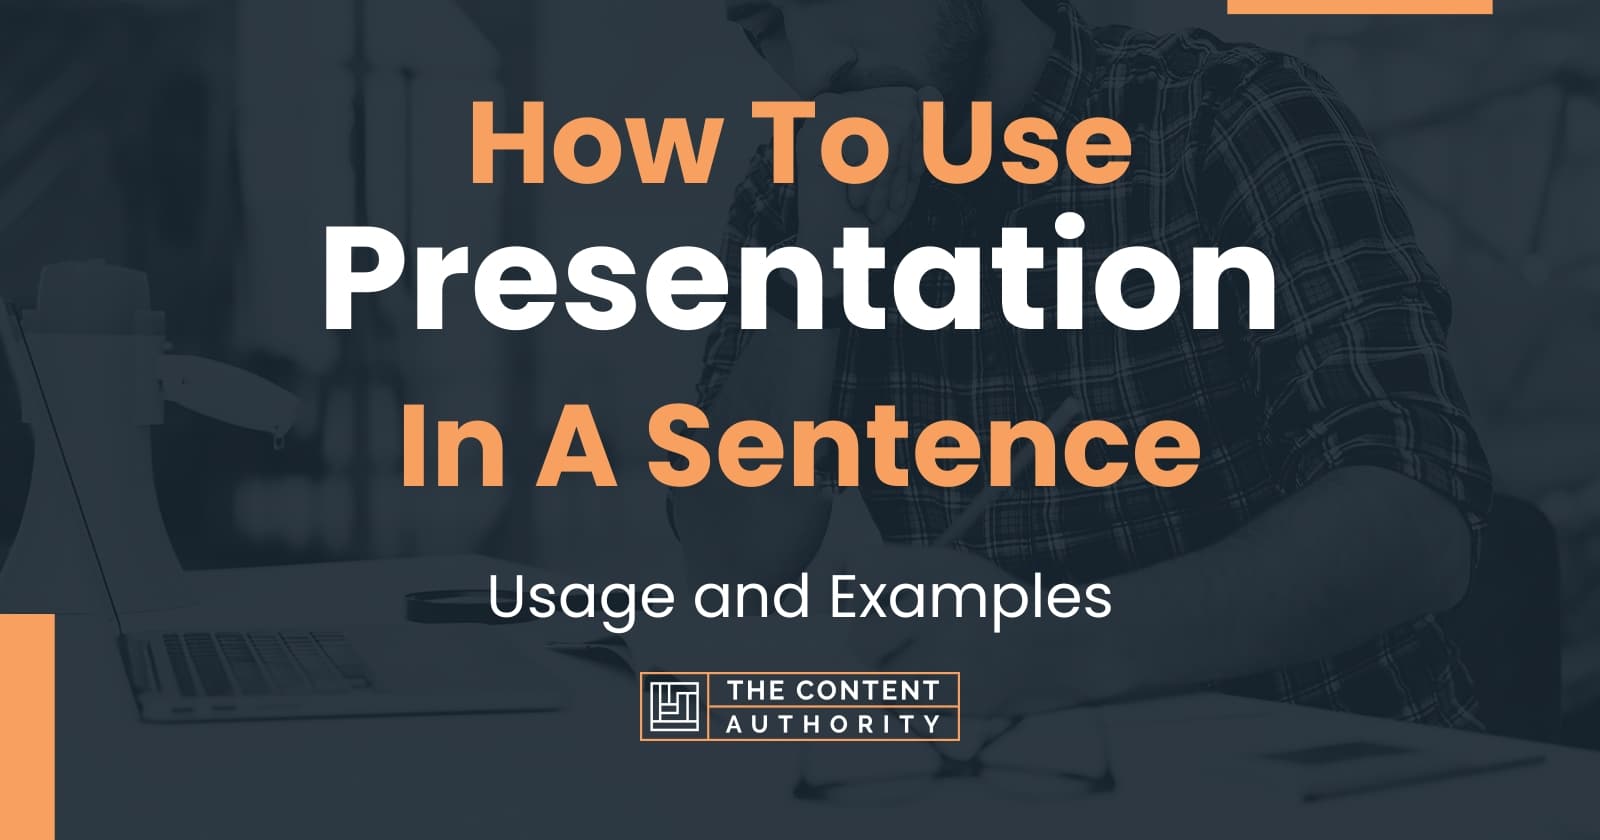 give me a sentence about presentation